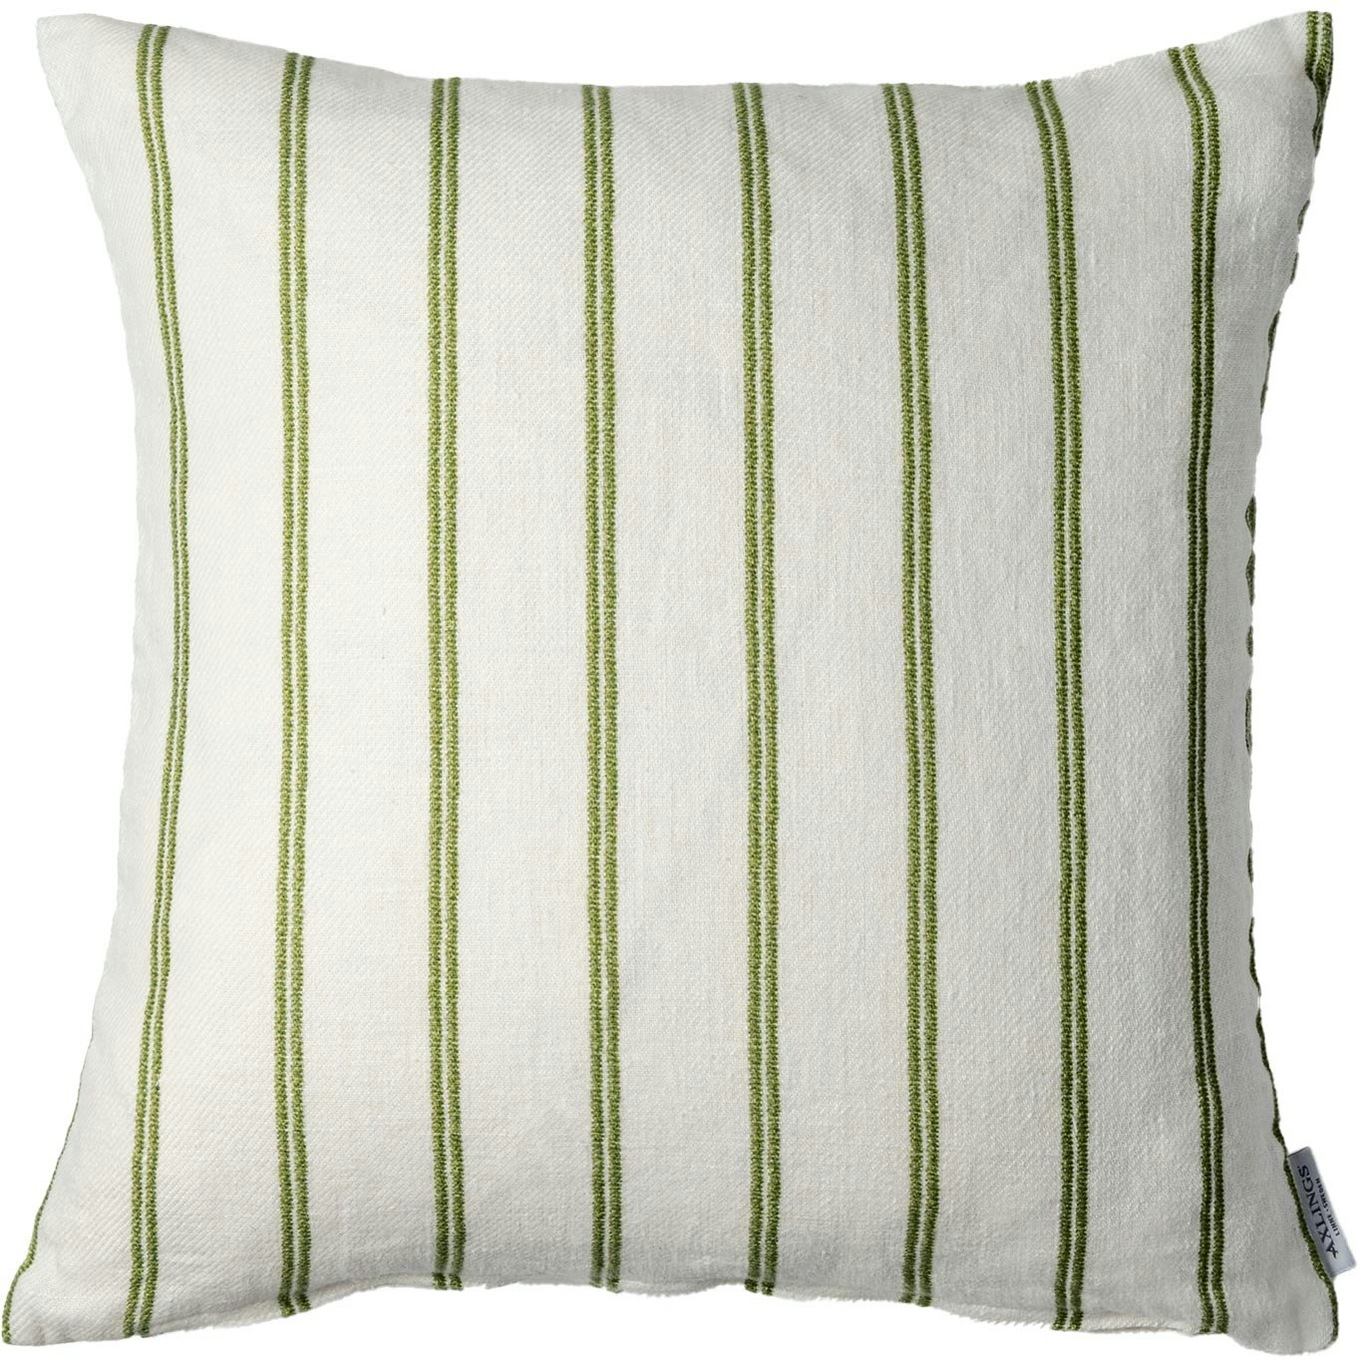 Linåker Cushion Cover 43x43 cm, Green/Off-white